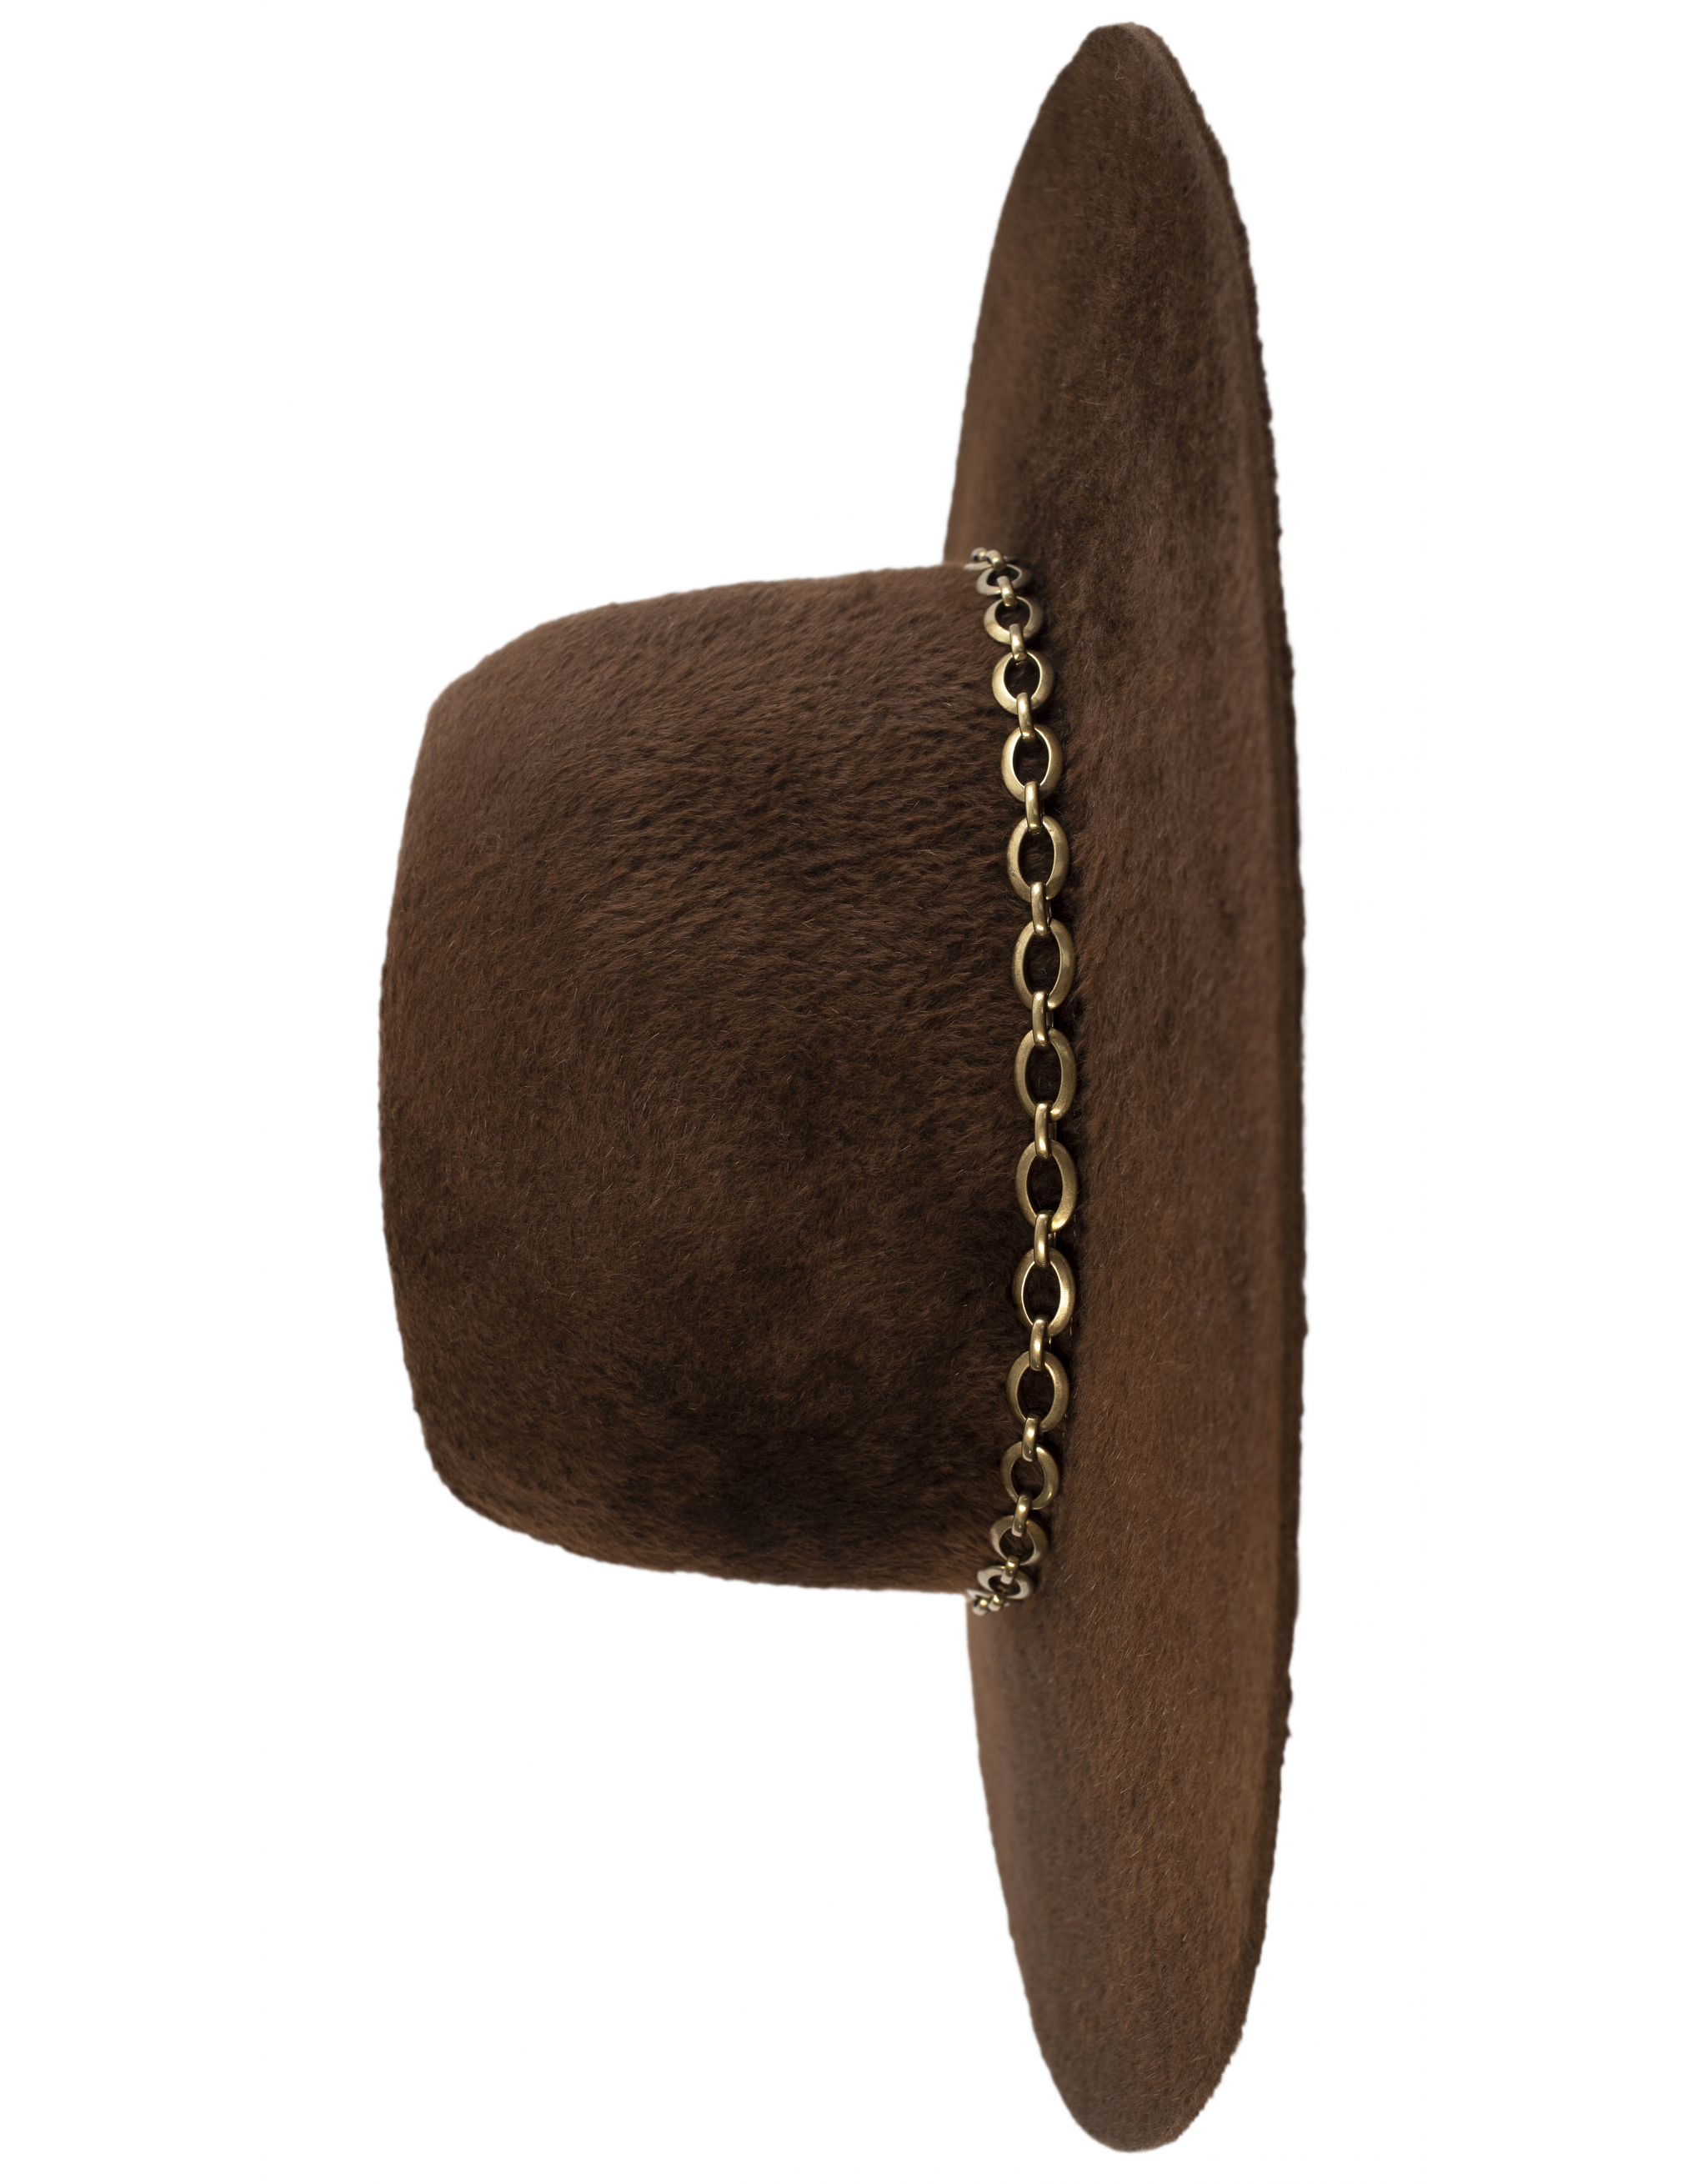 Коричневая шляпа с широкими полями Undercover UC2A1H01/brown, размер 1